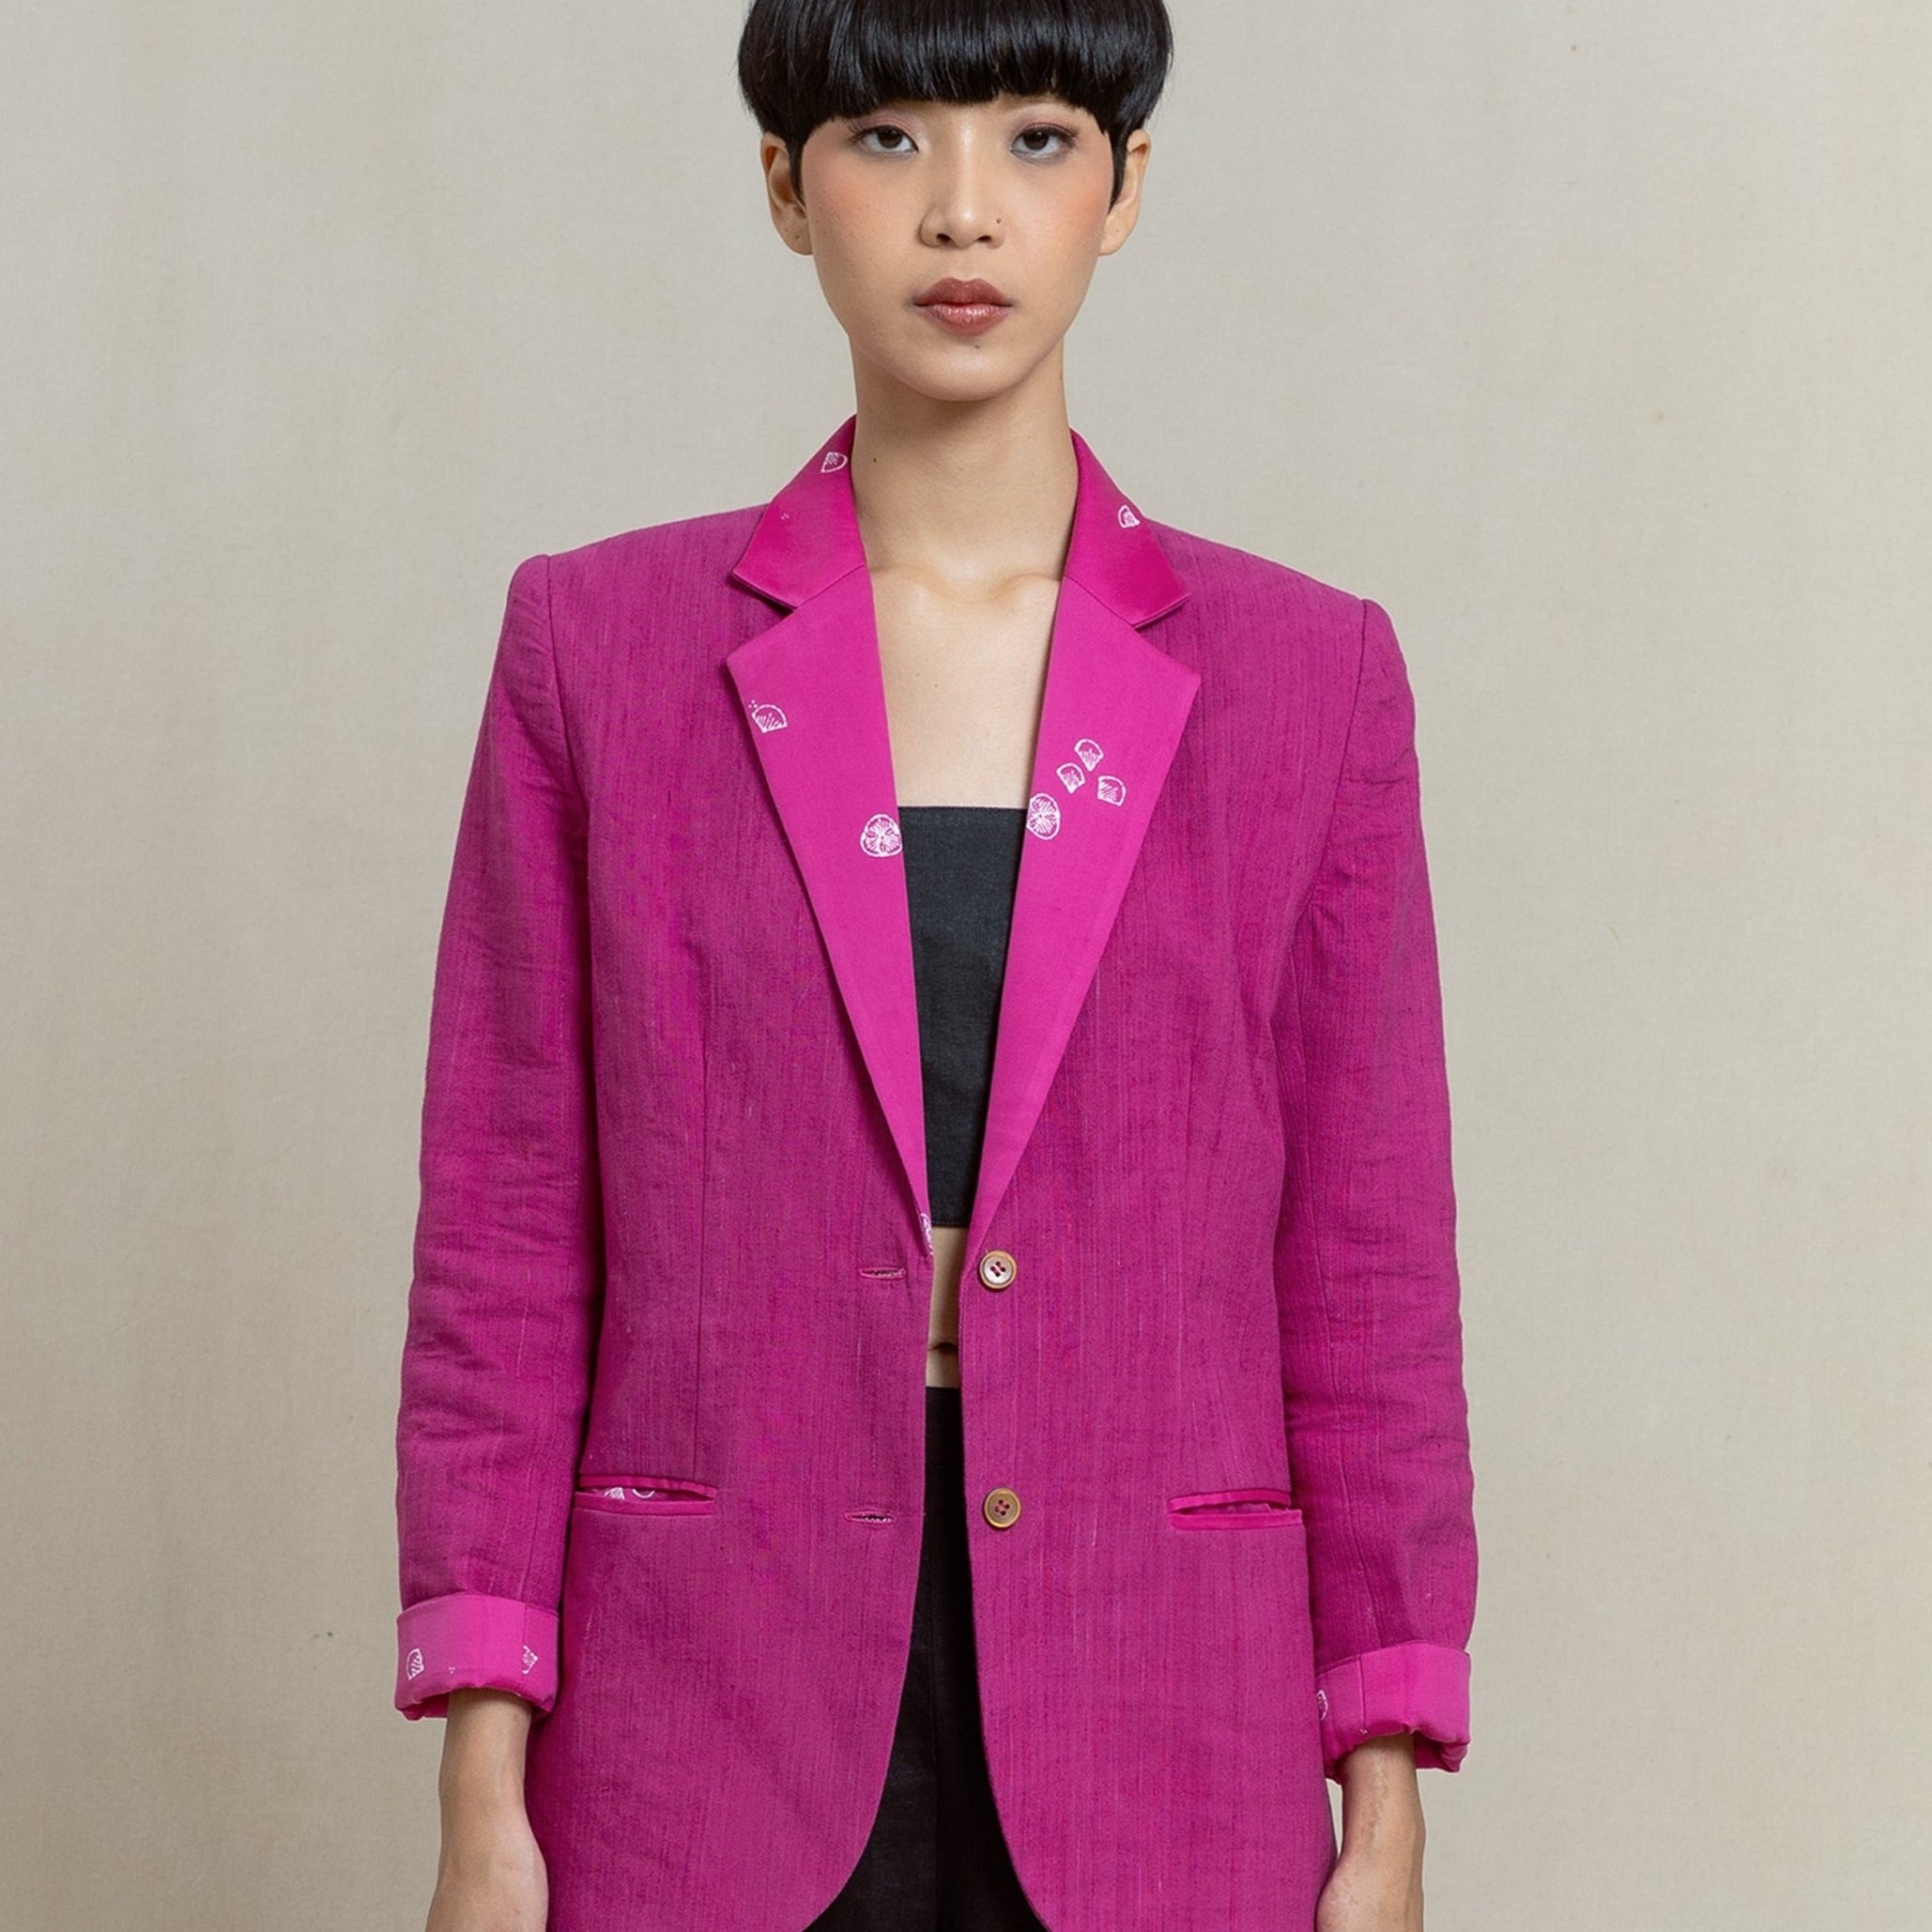 blazer, batik blazer, pink blazer, women's blazer, women's fashion, naturally dyed